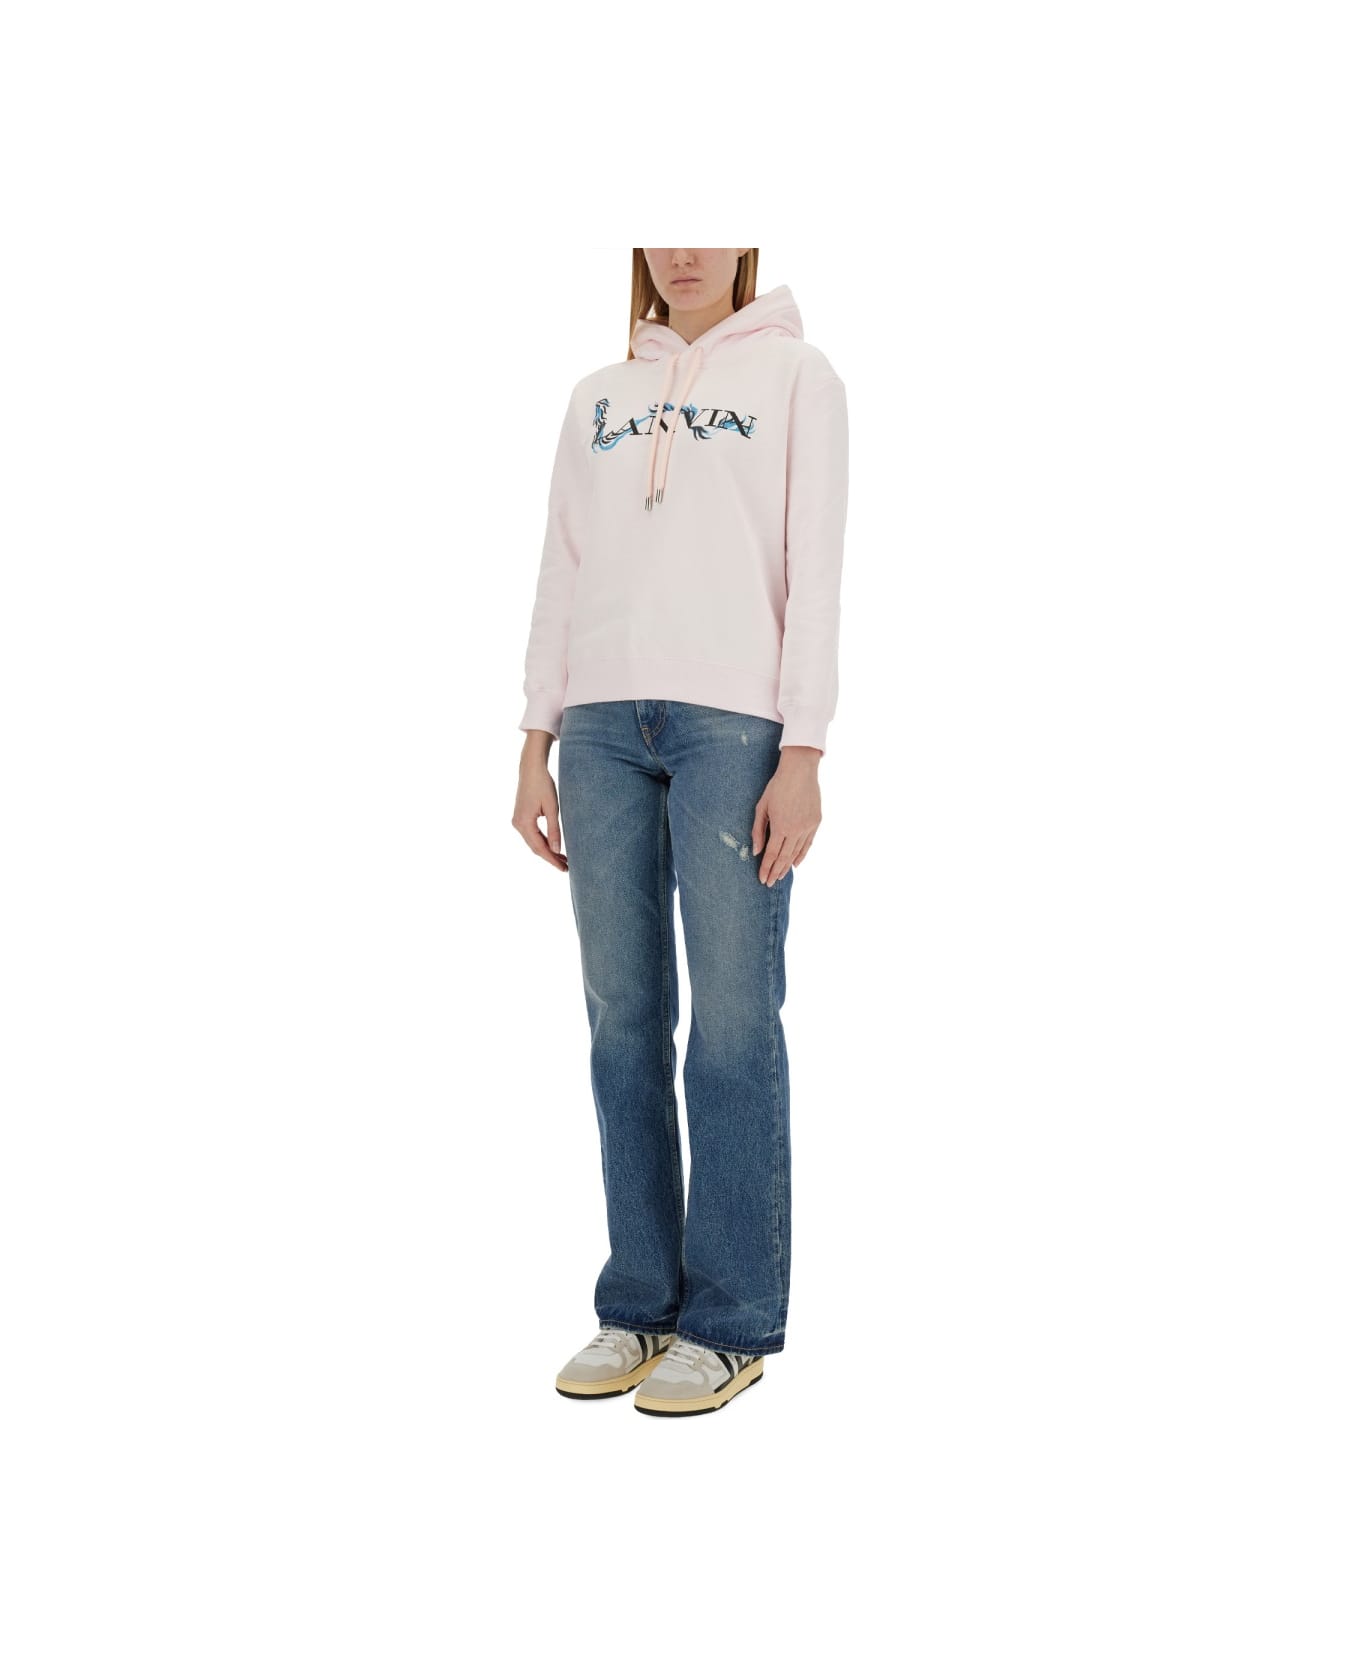 Lanvin Sweatshirt With Print - PINK フリース